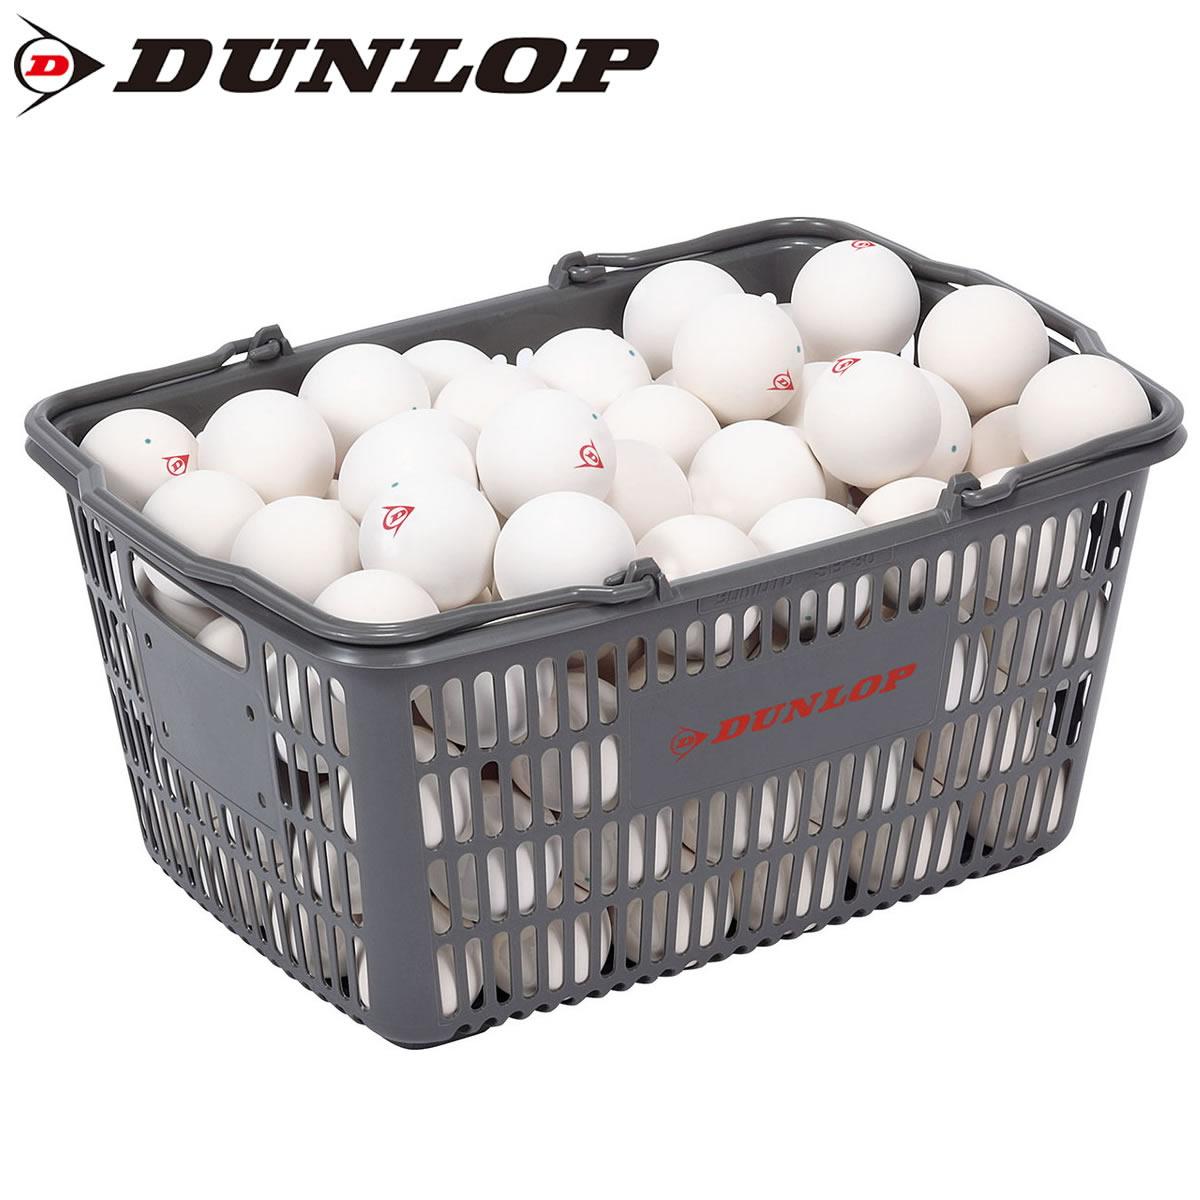 DUNLOP DSTB2CS120 ソフトテニスボール 公認球(10ダース入り) ソフトテニス 2020年春夏モデル ダンロップ 【取り寄せ】